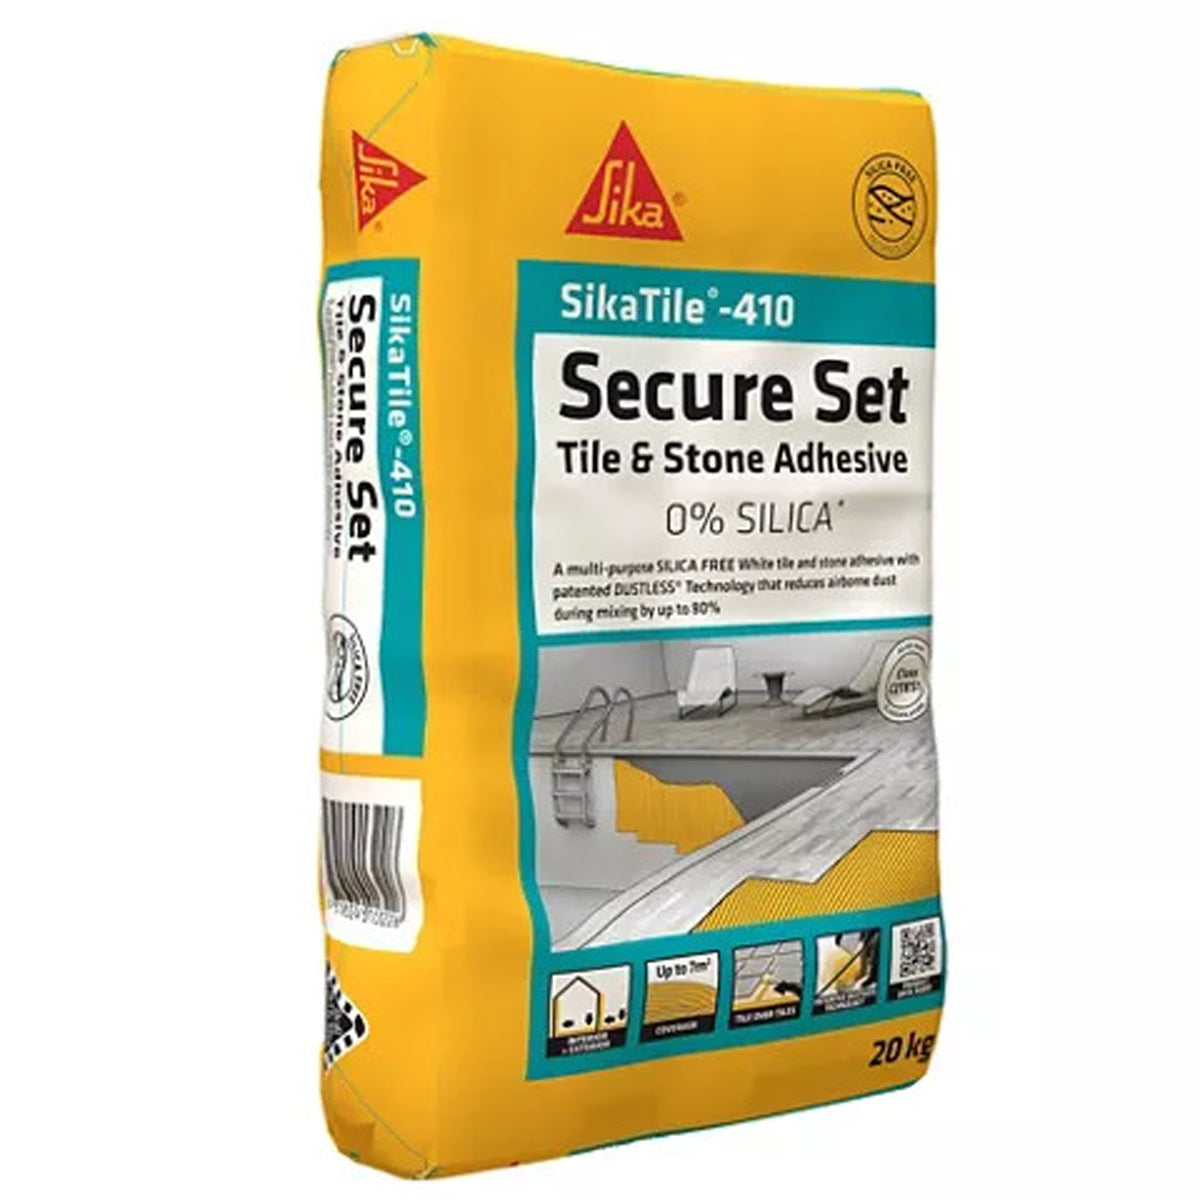 Sika 410 Secure Set 20 kg Tile & Stone Adhesive